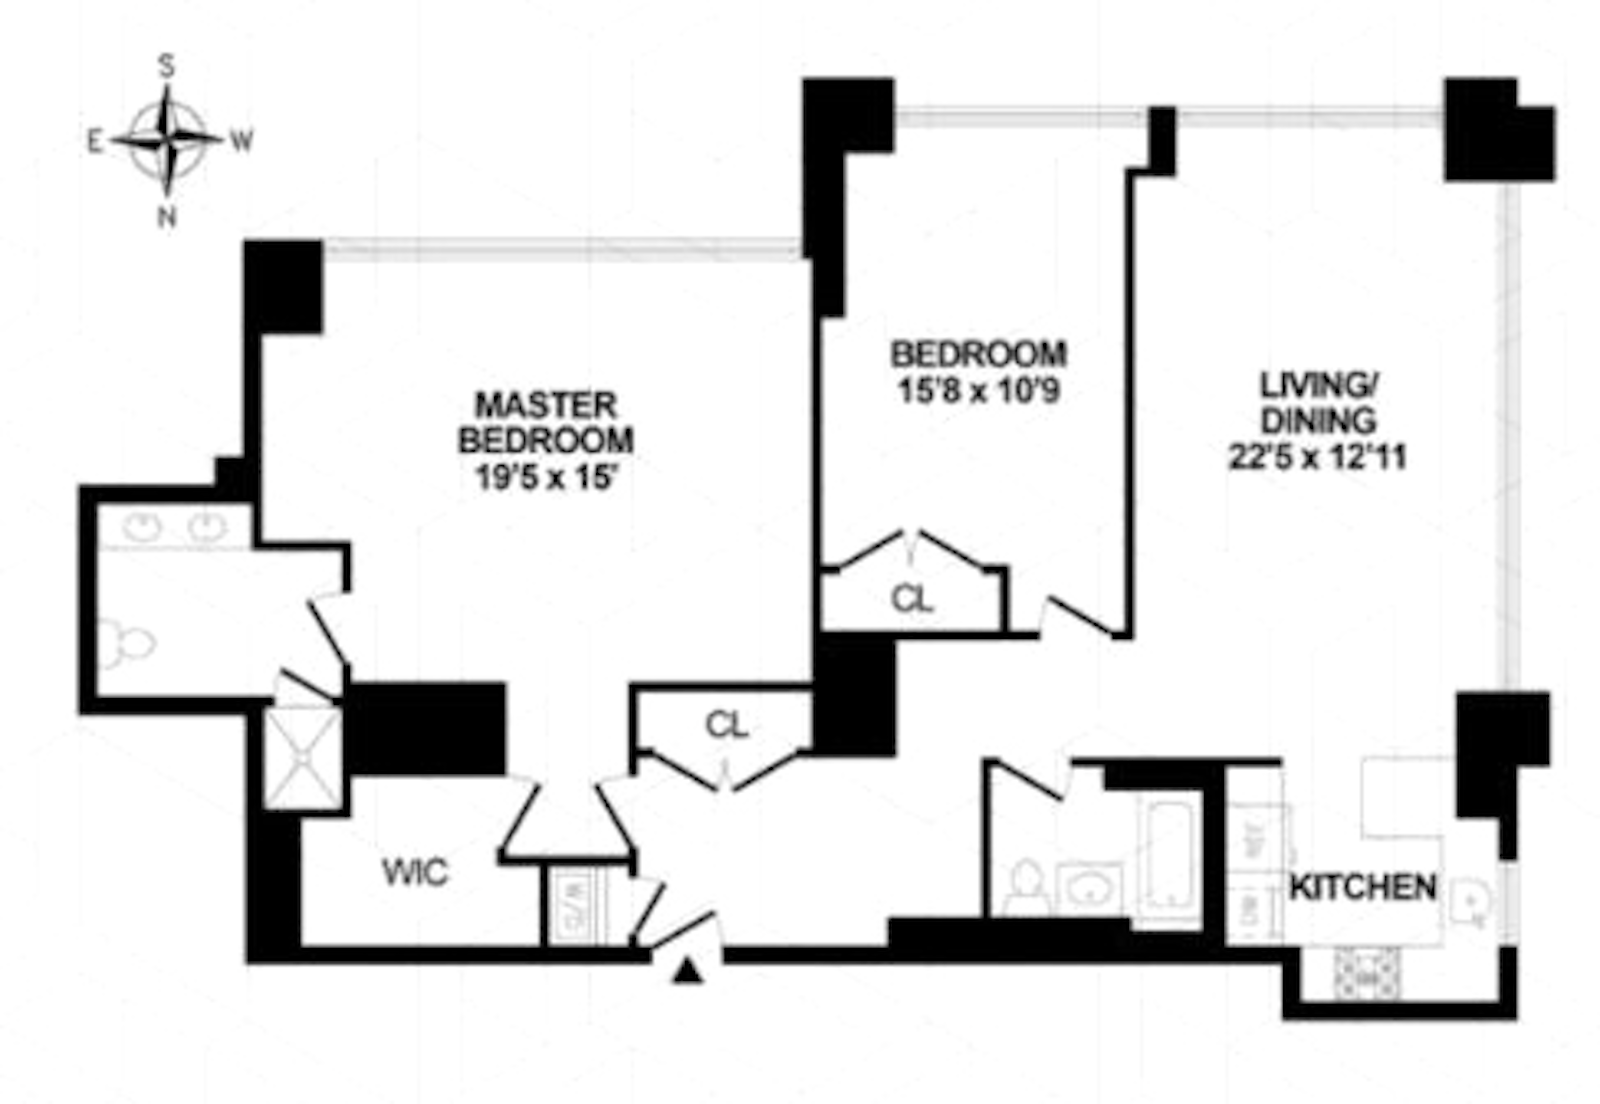 Floorplan for 322 West 57th Street, 42B